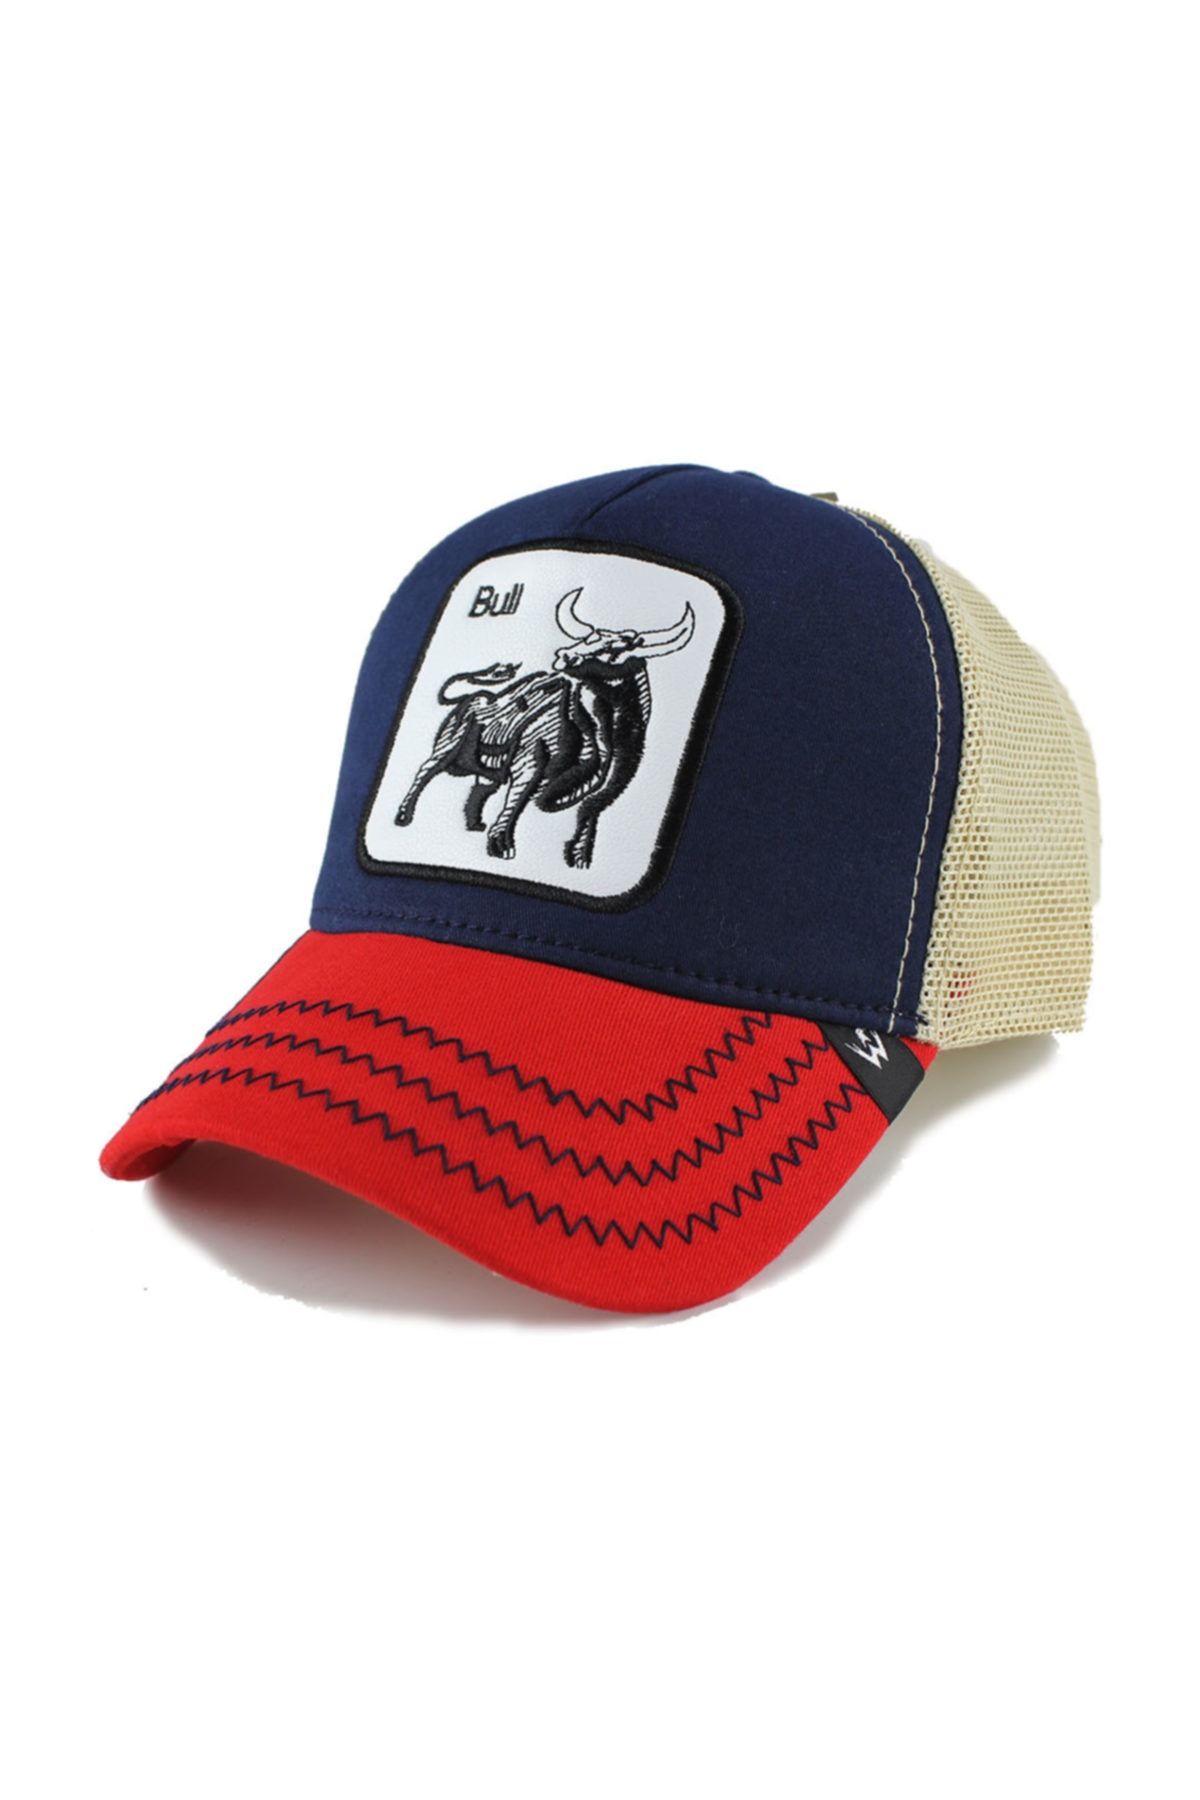 Silver Hawk Boğa (bull) Model Şapka Kırmızı Lacivert